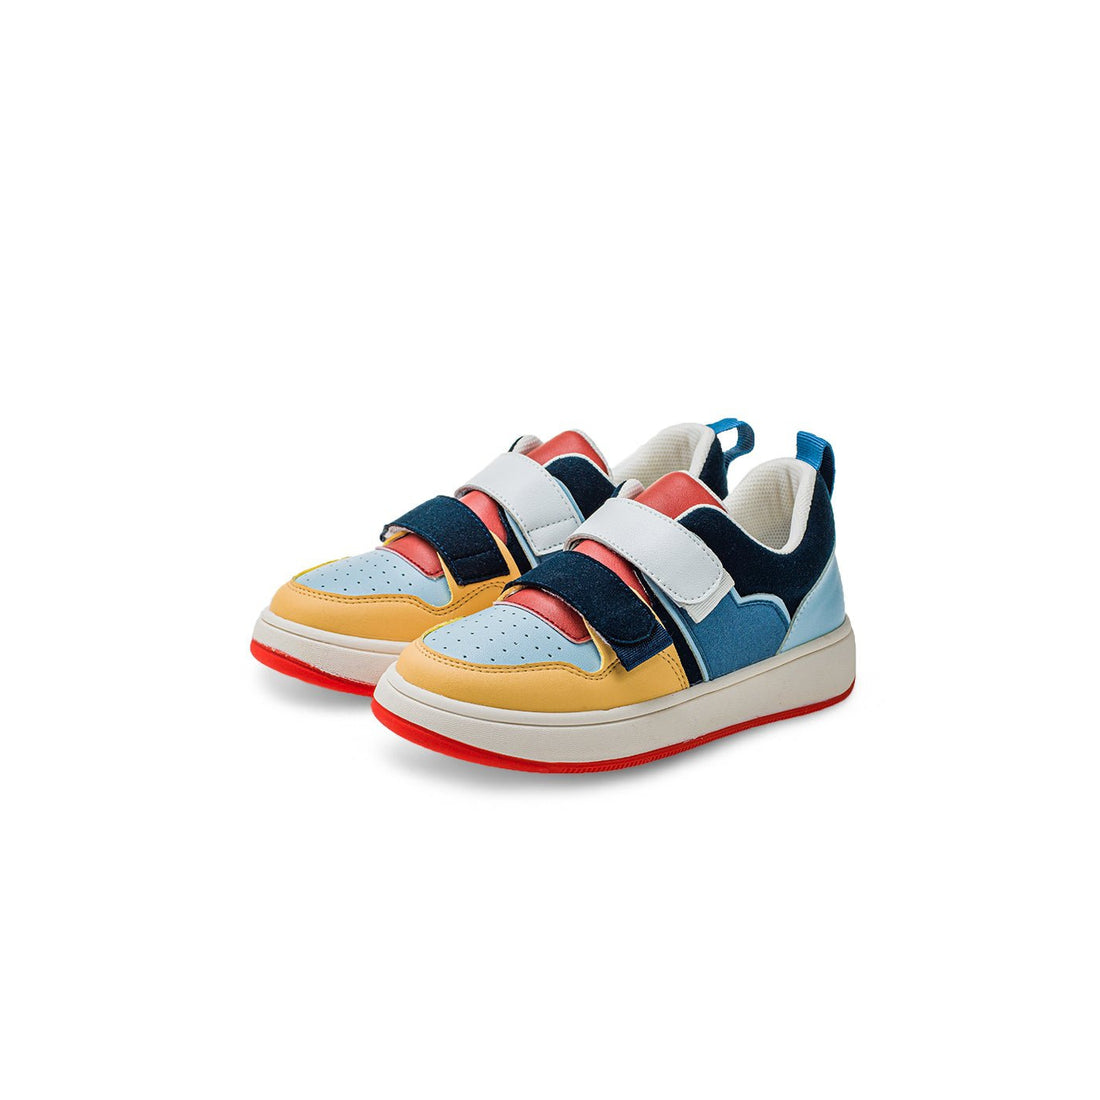 NEON Soft Sole Kids Yellow Sneakers - 0cm